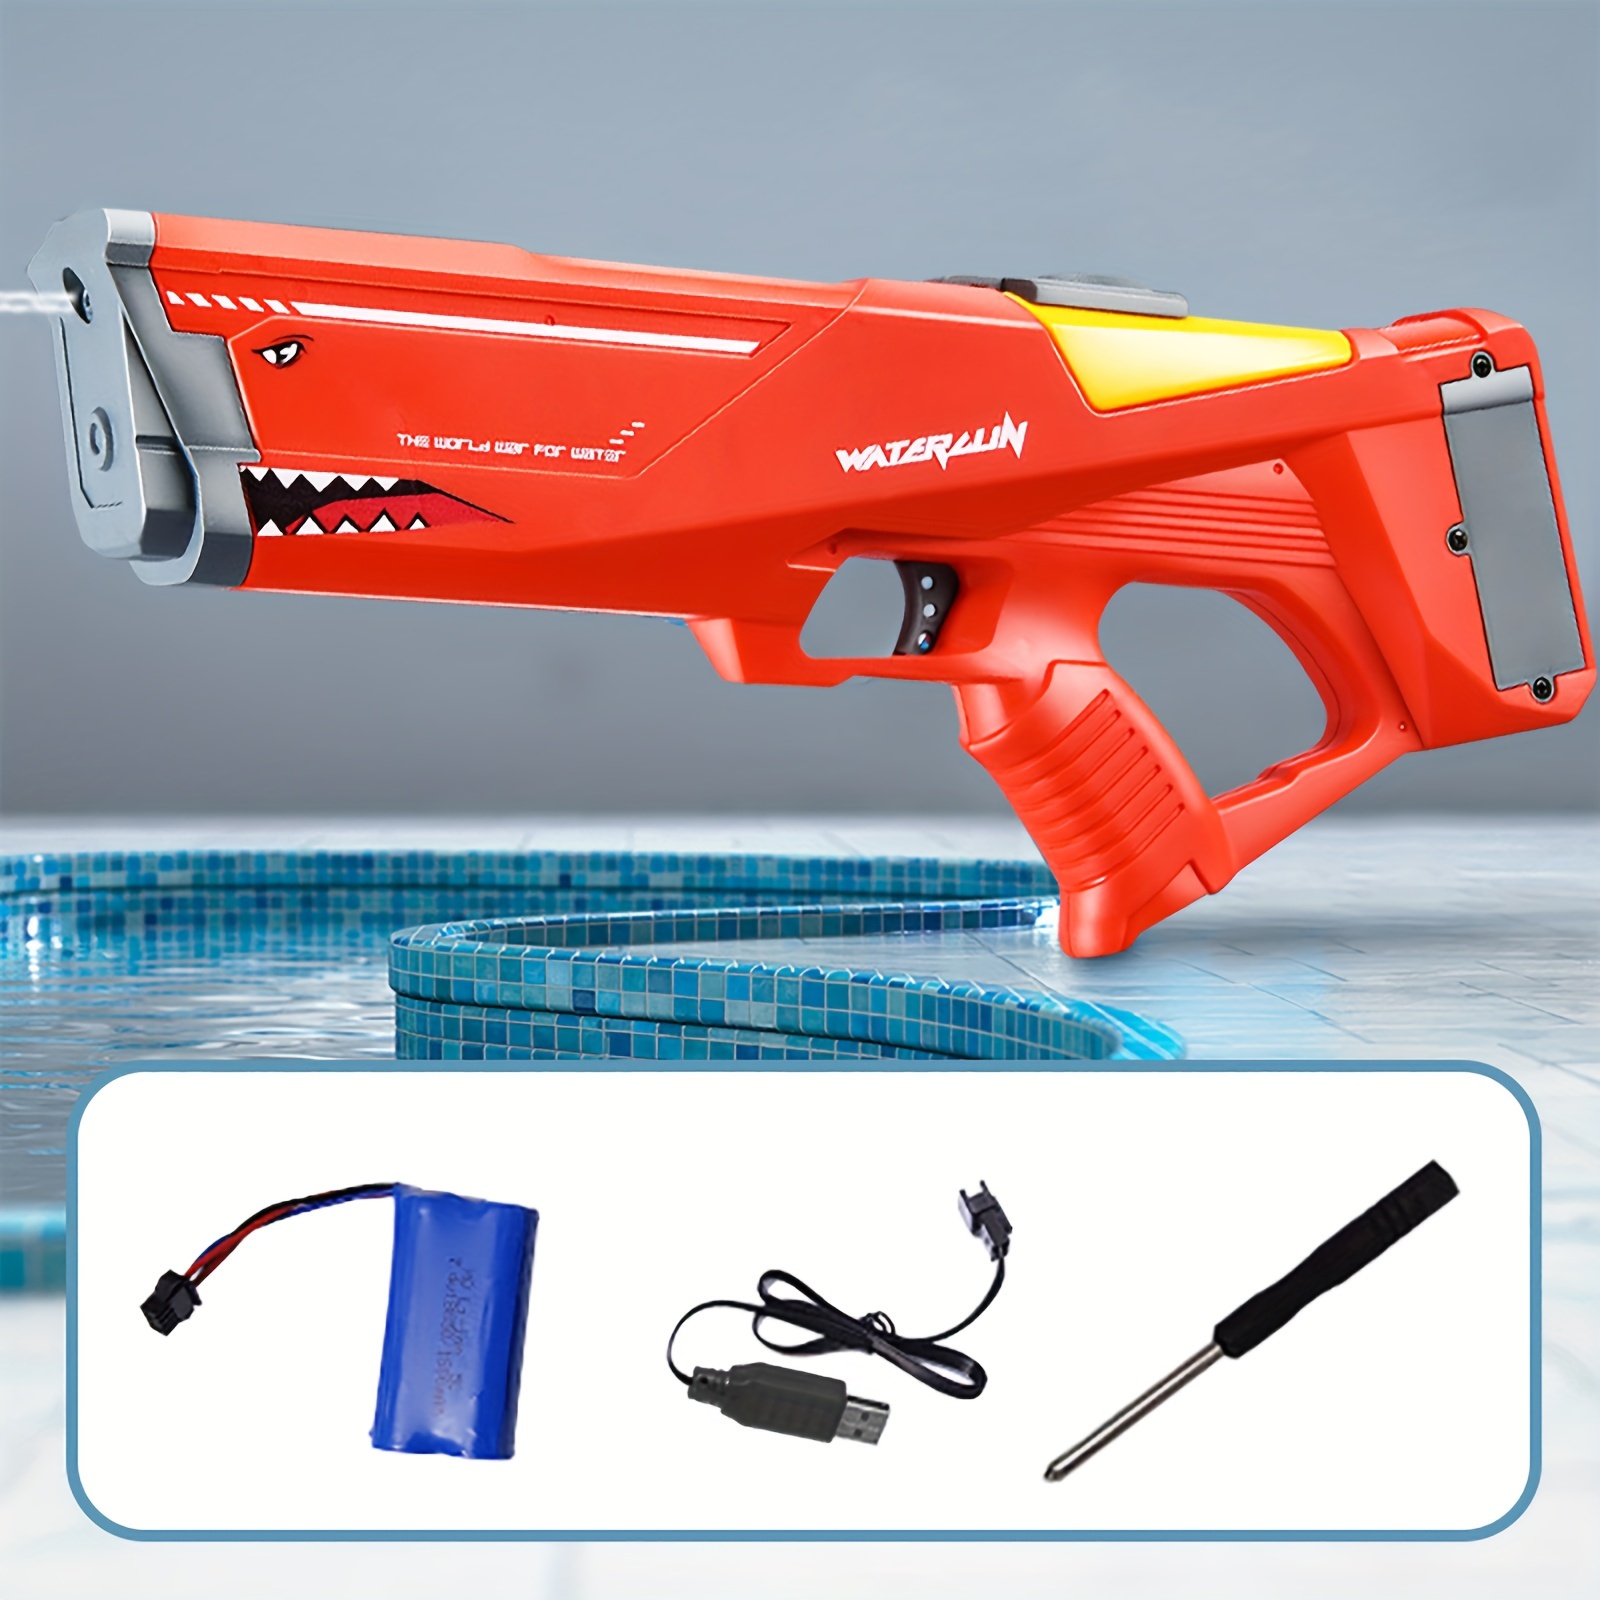 Top 5: The best electric water guns - Alternatives to Spyra under